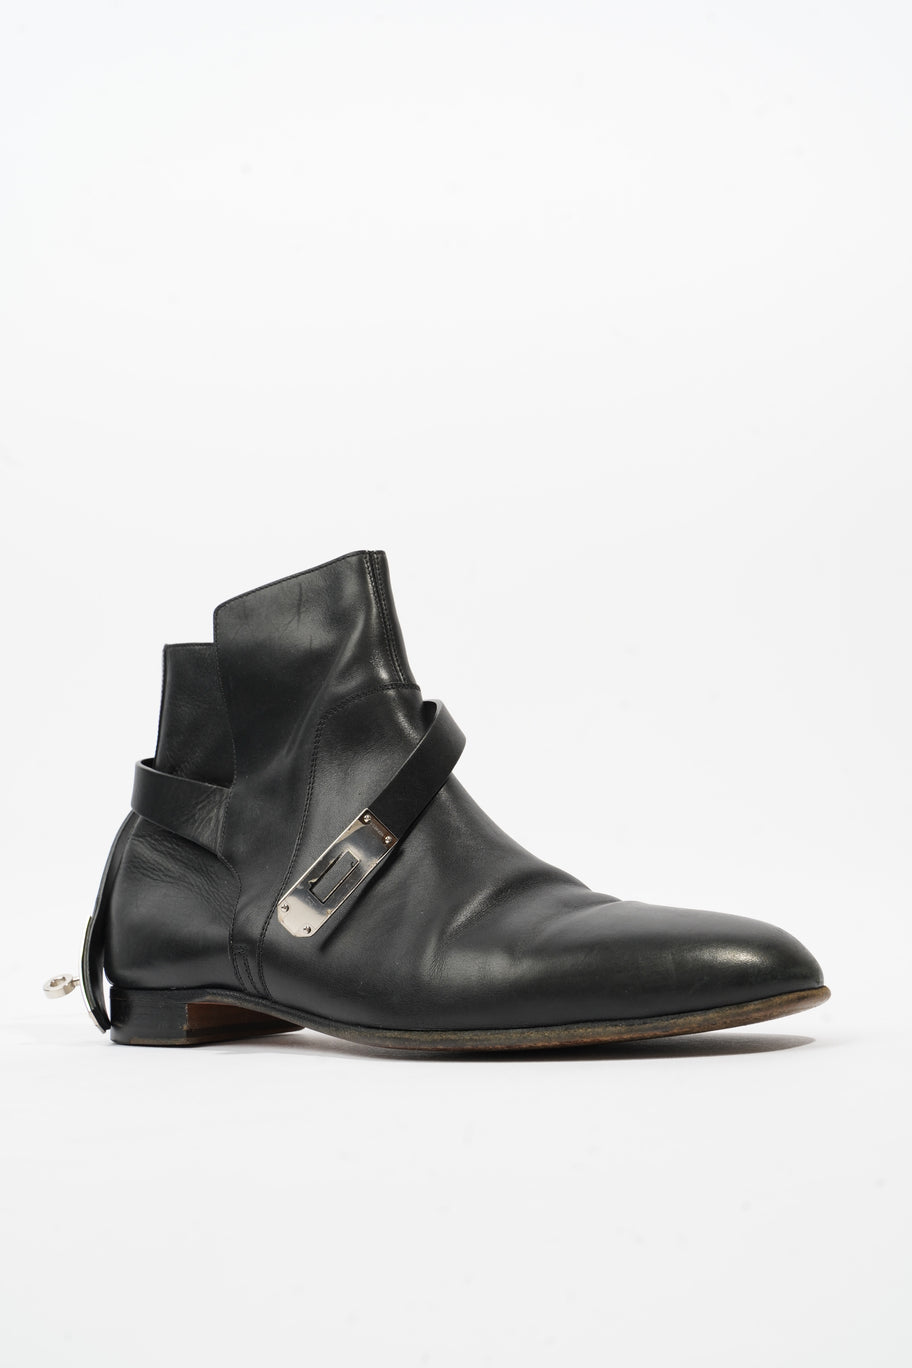 Neo Ankle Boot Black Leather EU 41 UK 8 Image 10